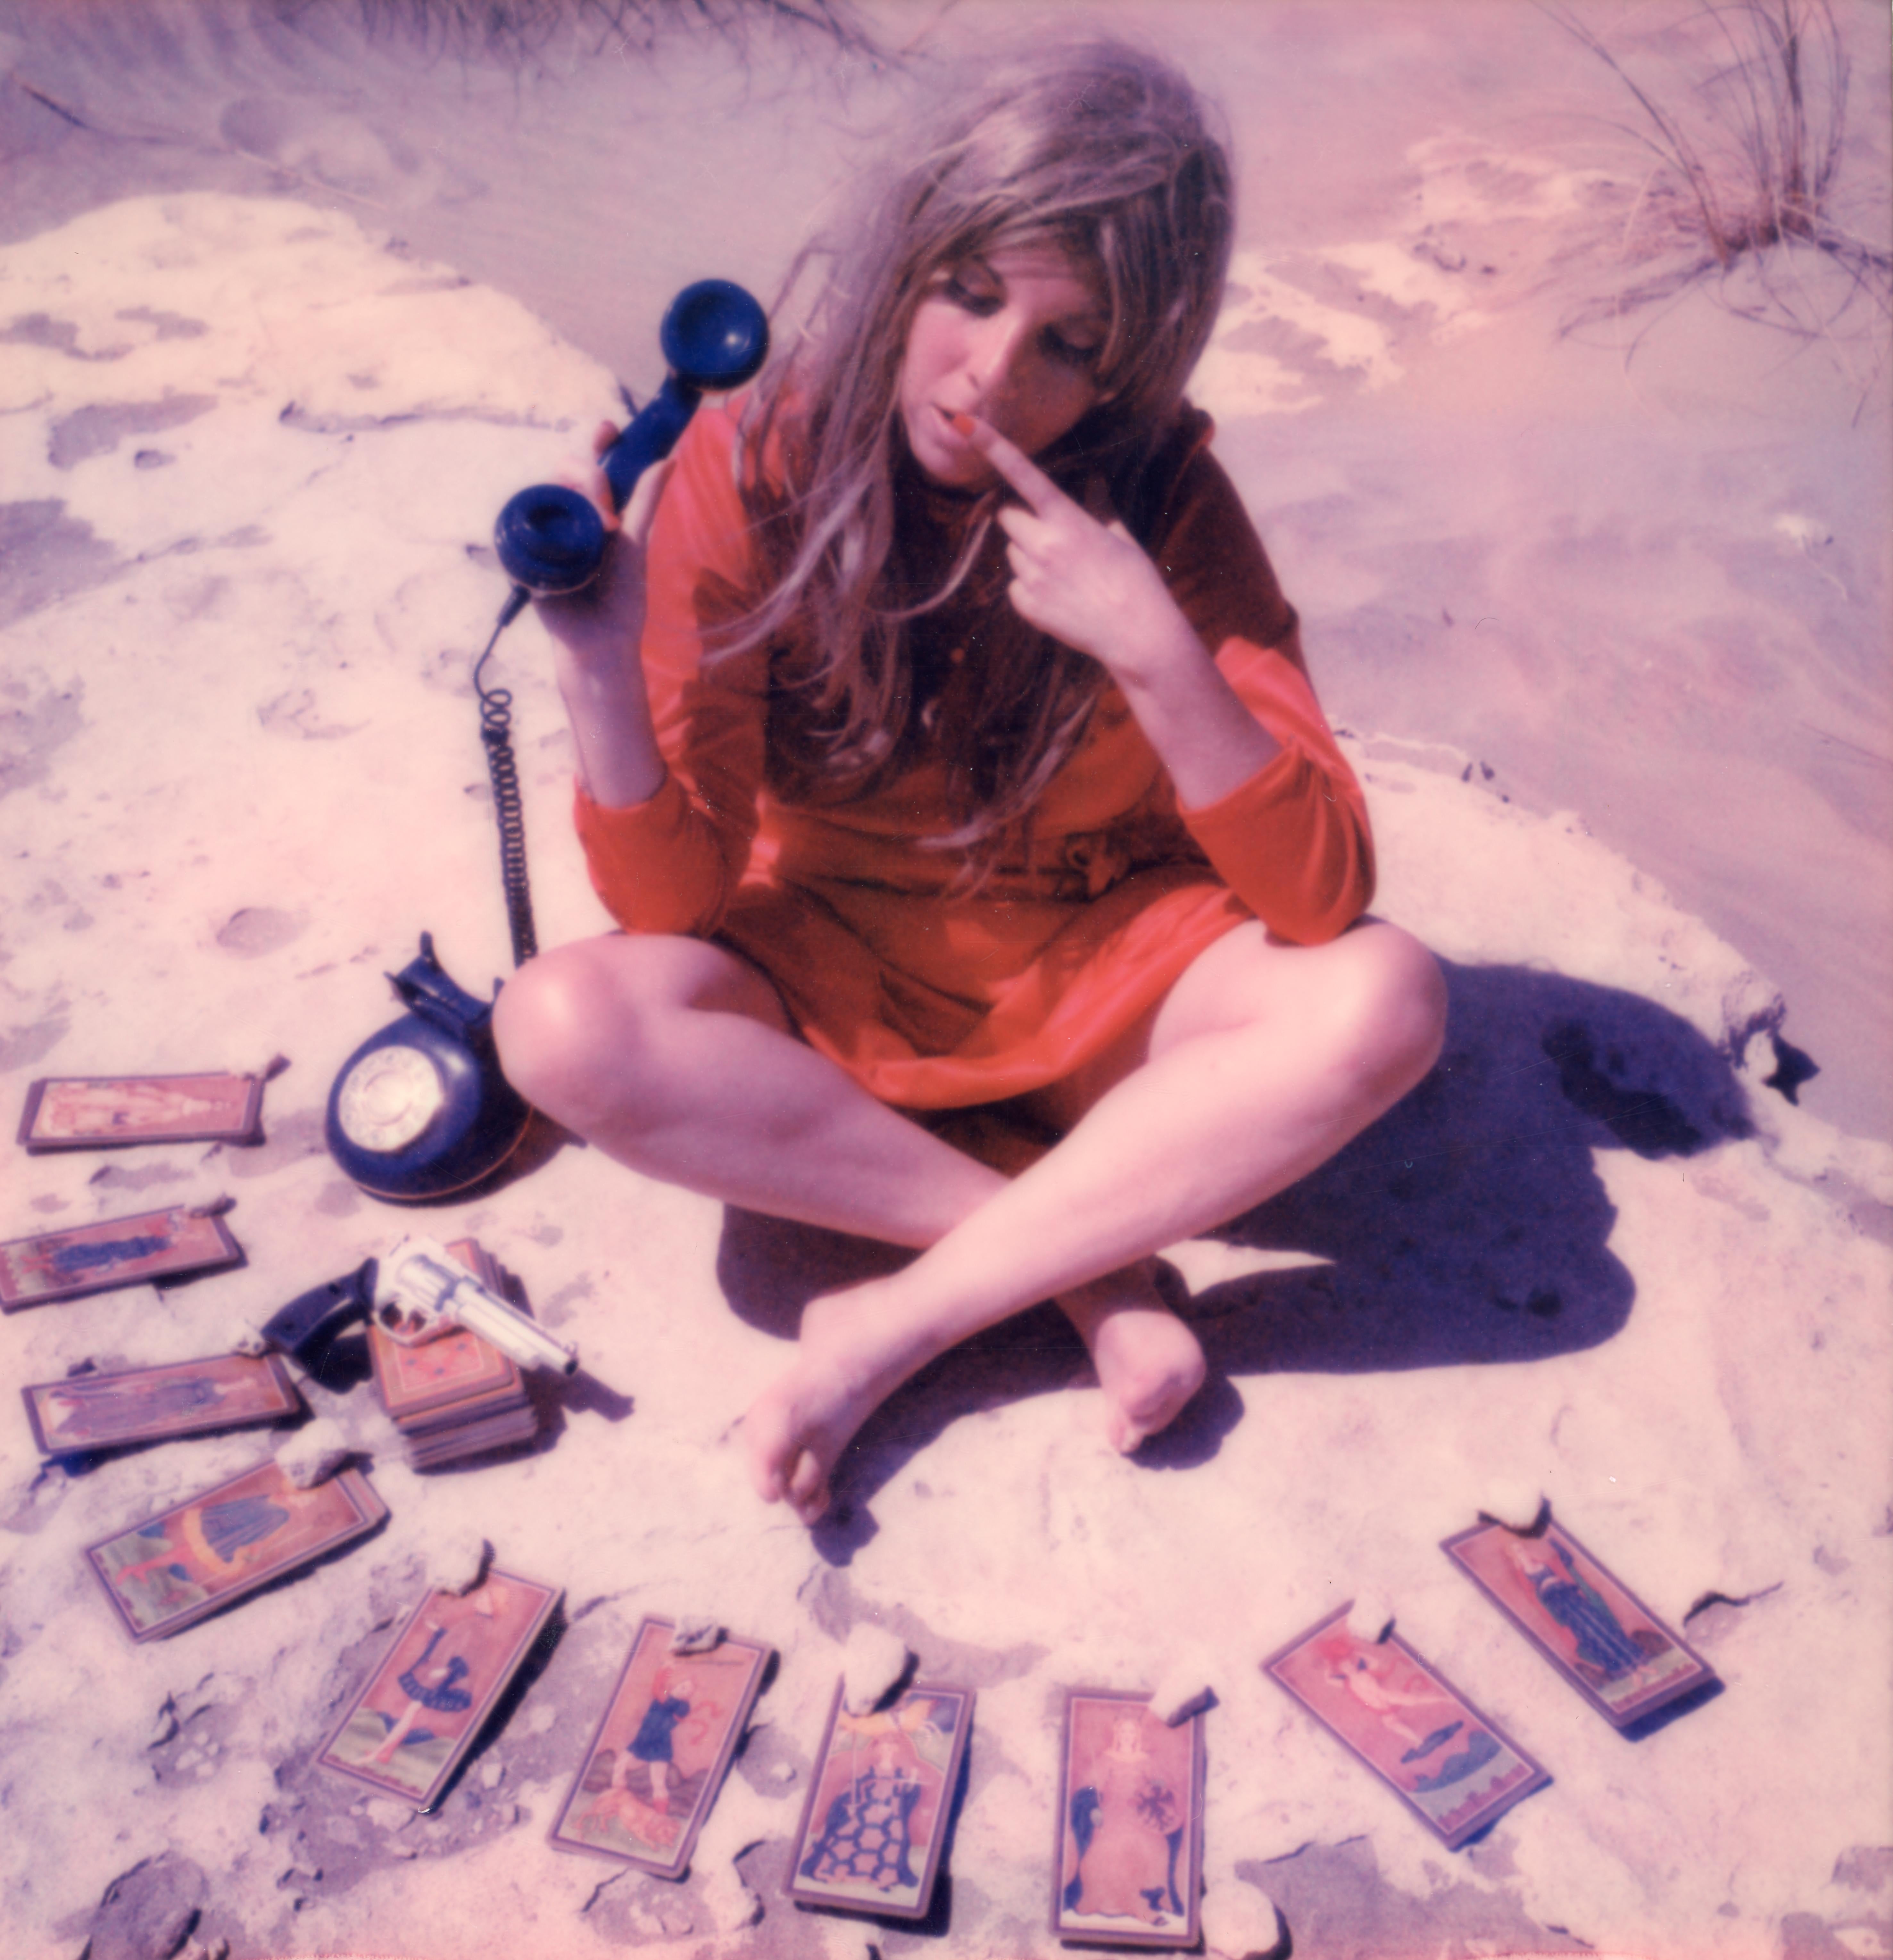 Clare Marie Bailey Figurative Photograph - 24 hr Psychic Desert Hotline - Contemporary, Polaroid, Photograph, Figurative